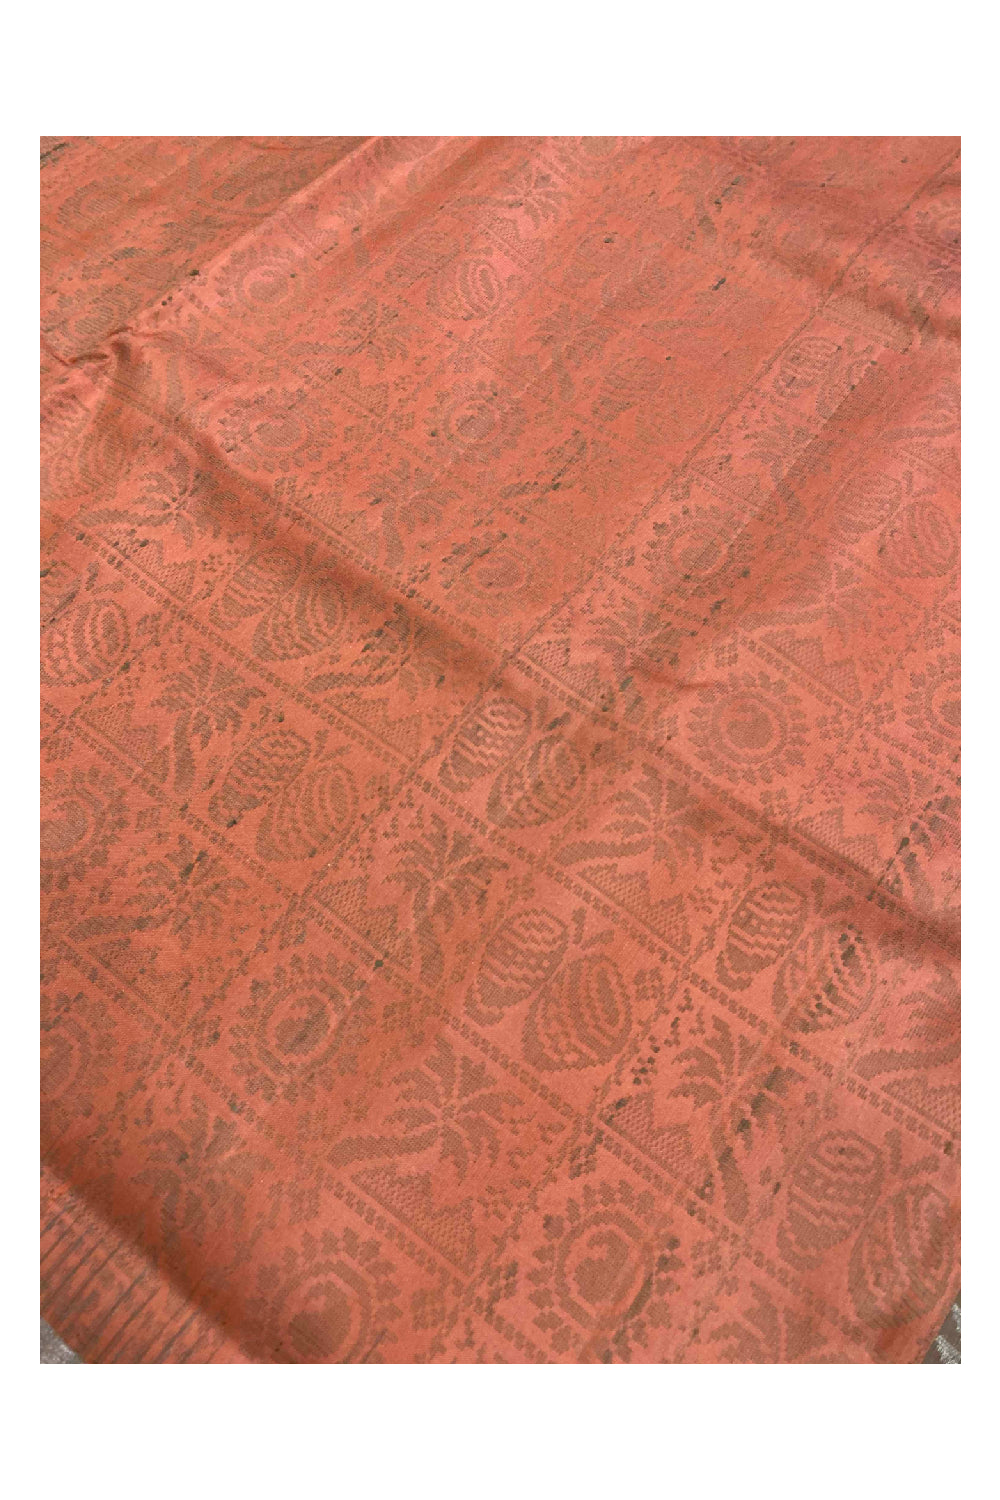 Southloom Handloom Pure Silk Kanchipuram Saree in Peach Floral Motifs